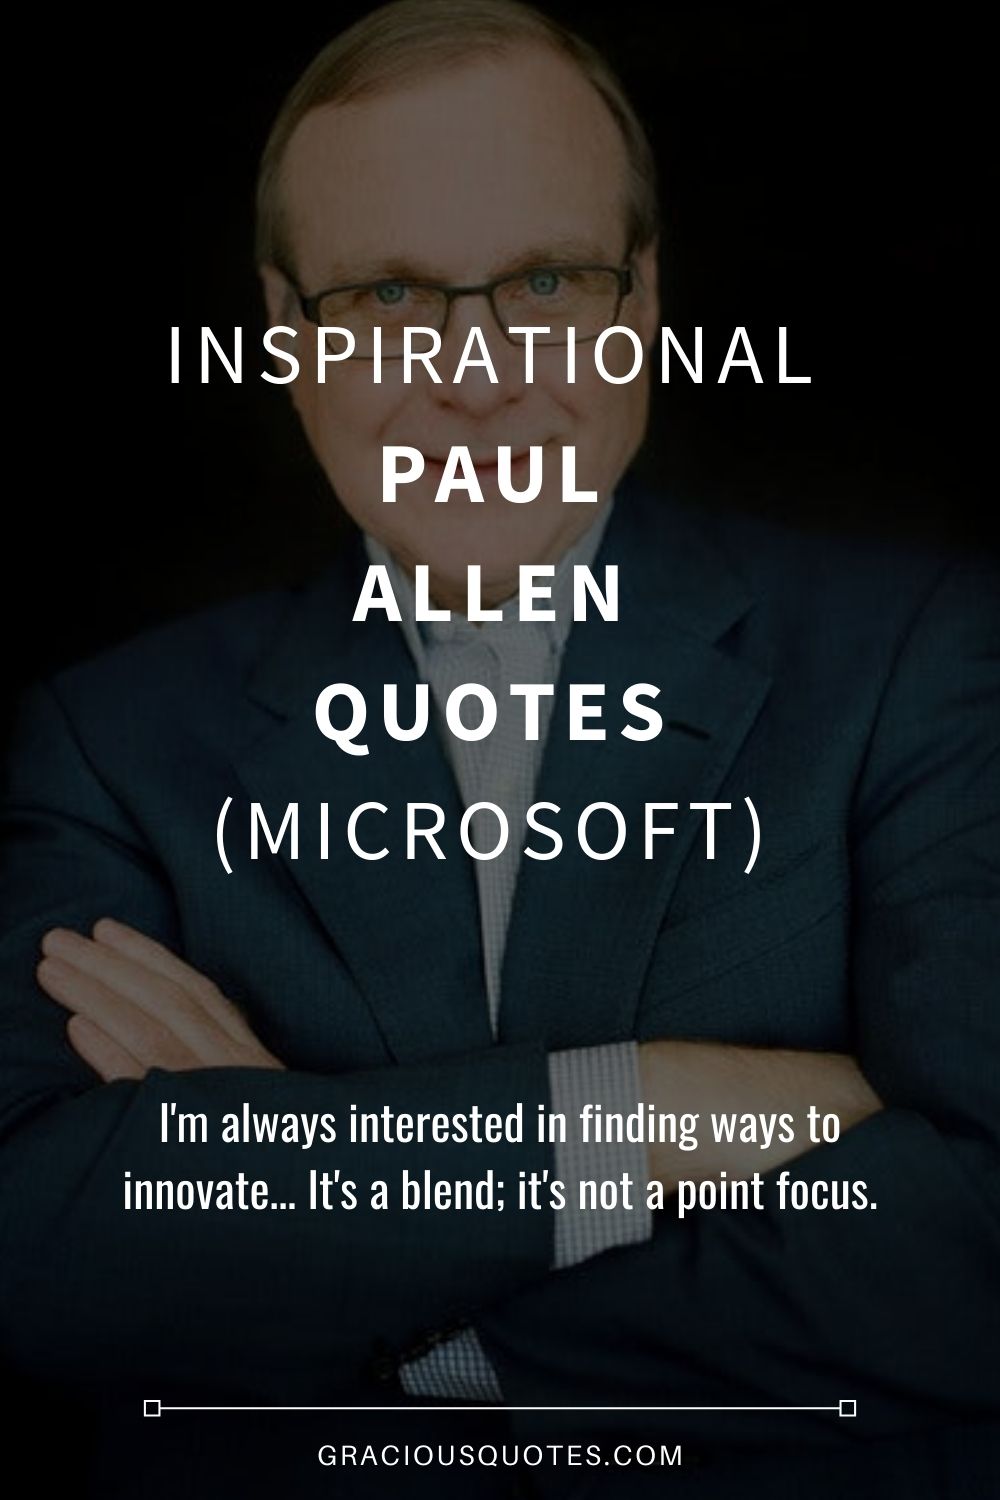 Inspirational Paul Allen Quotes (MICROSOFT) - Gracious Quotes